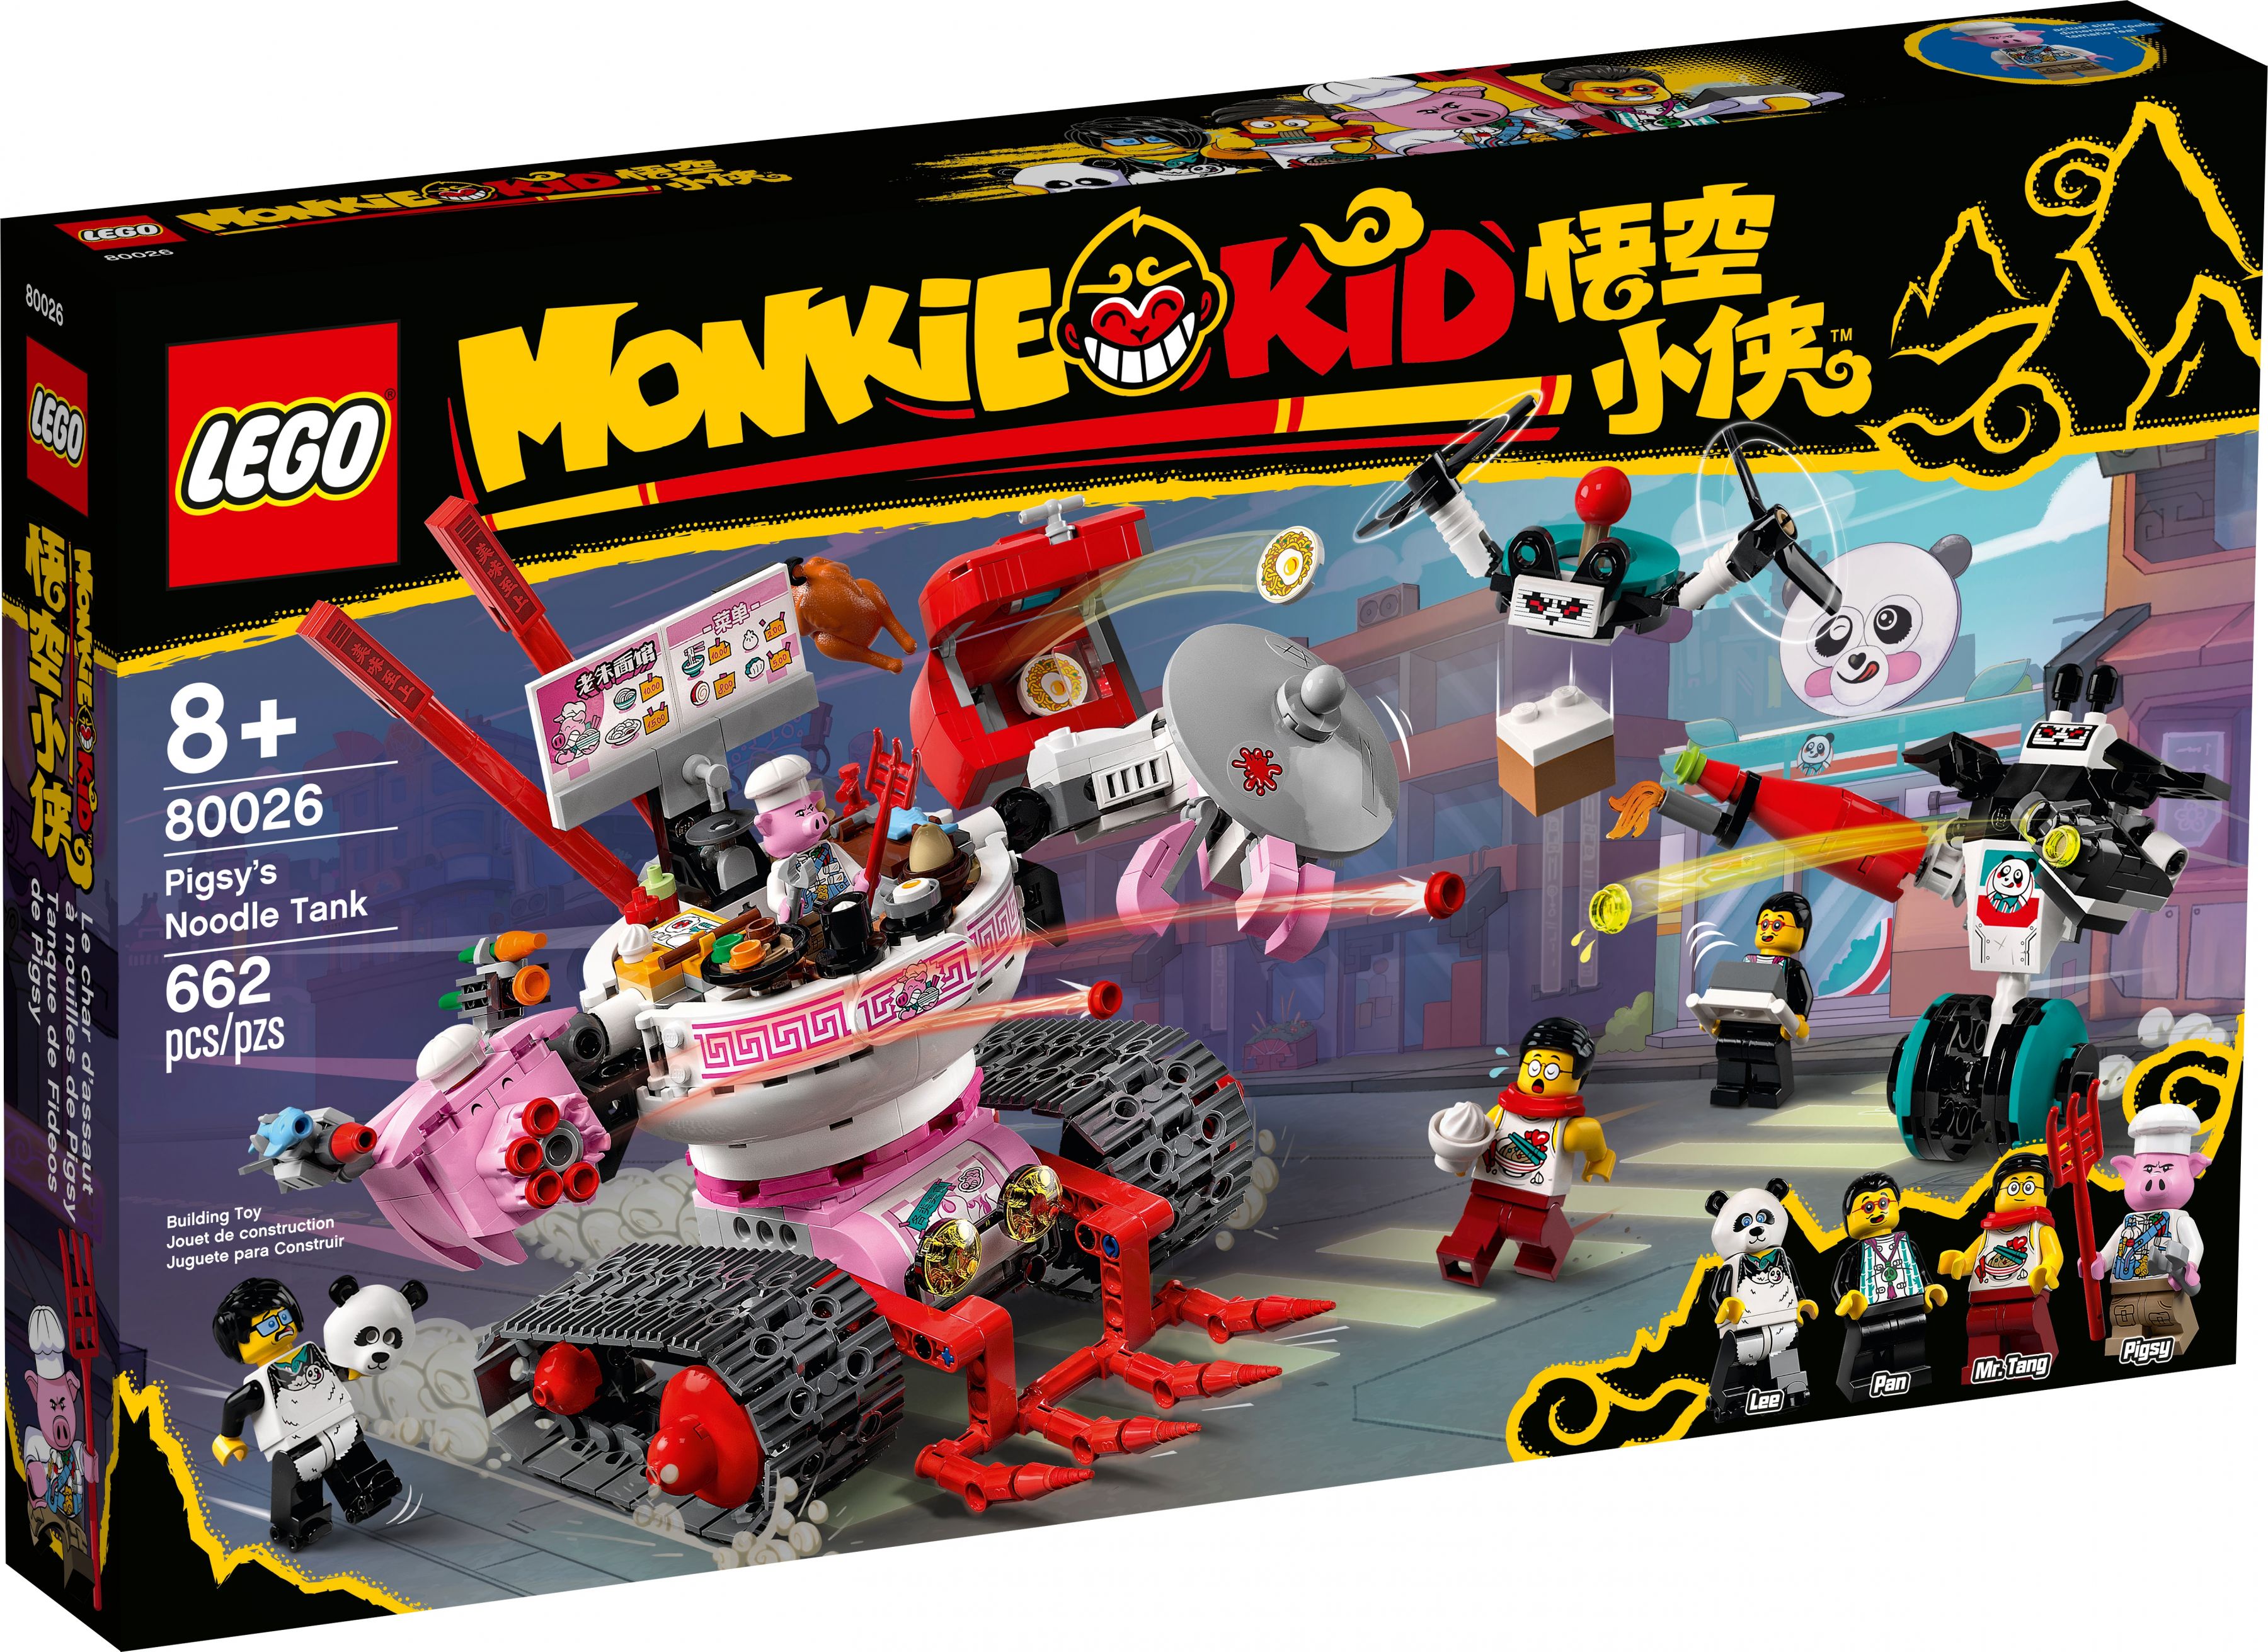 LEGO Monkie Kid 80026 Pigsys Nudelwagen LEGO_80026_alt1.jpg